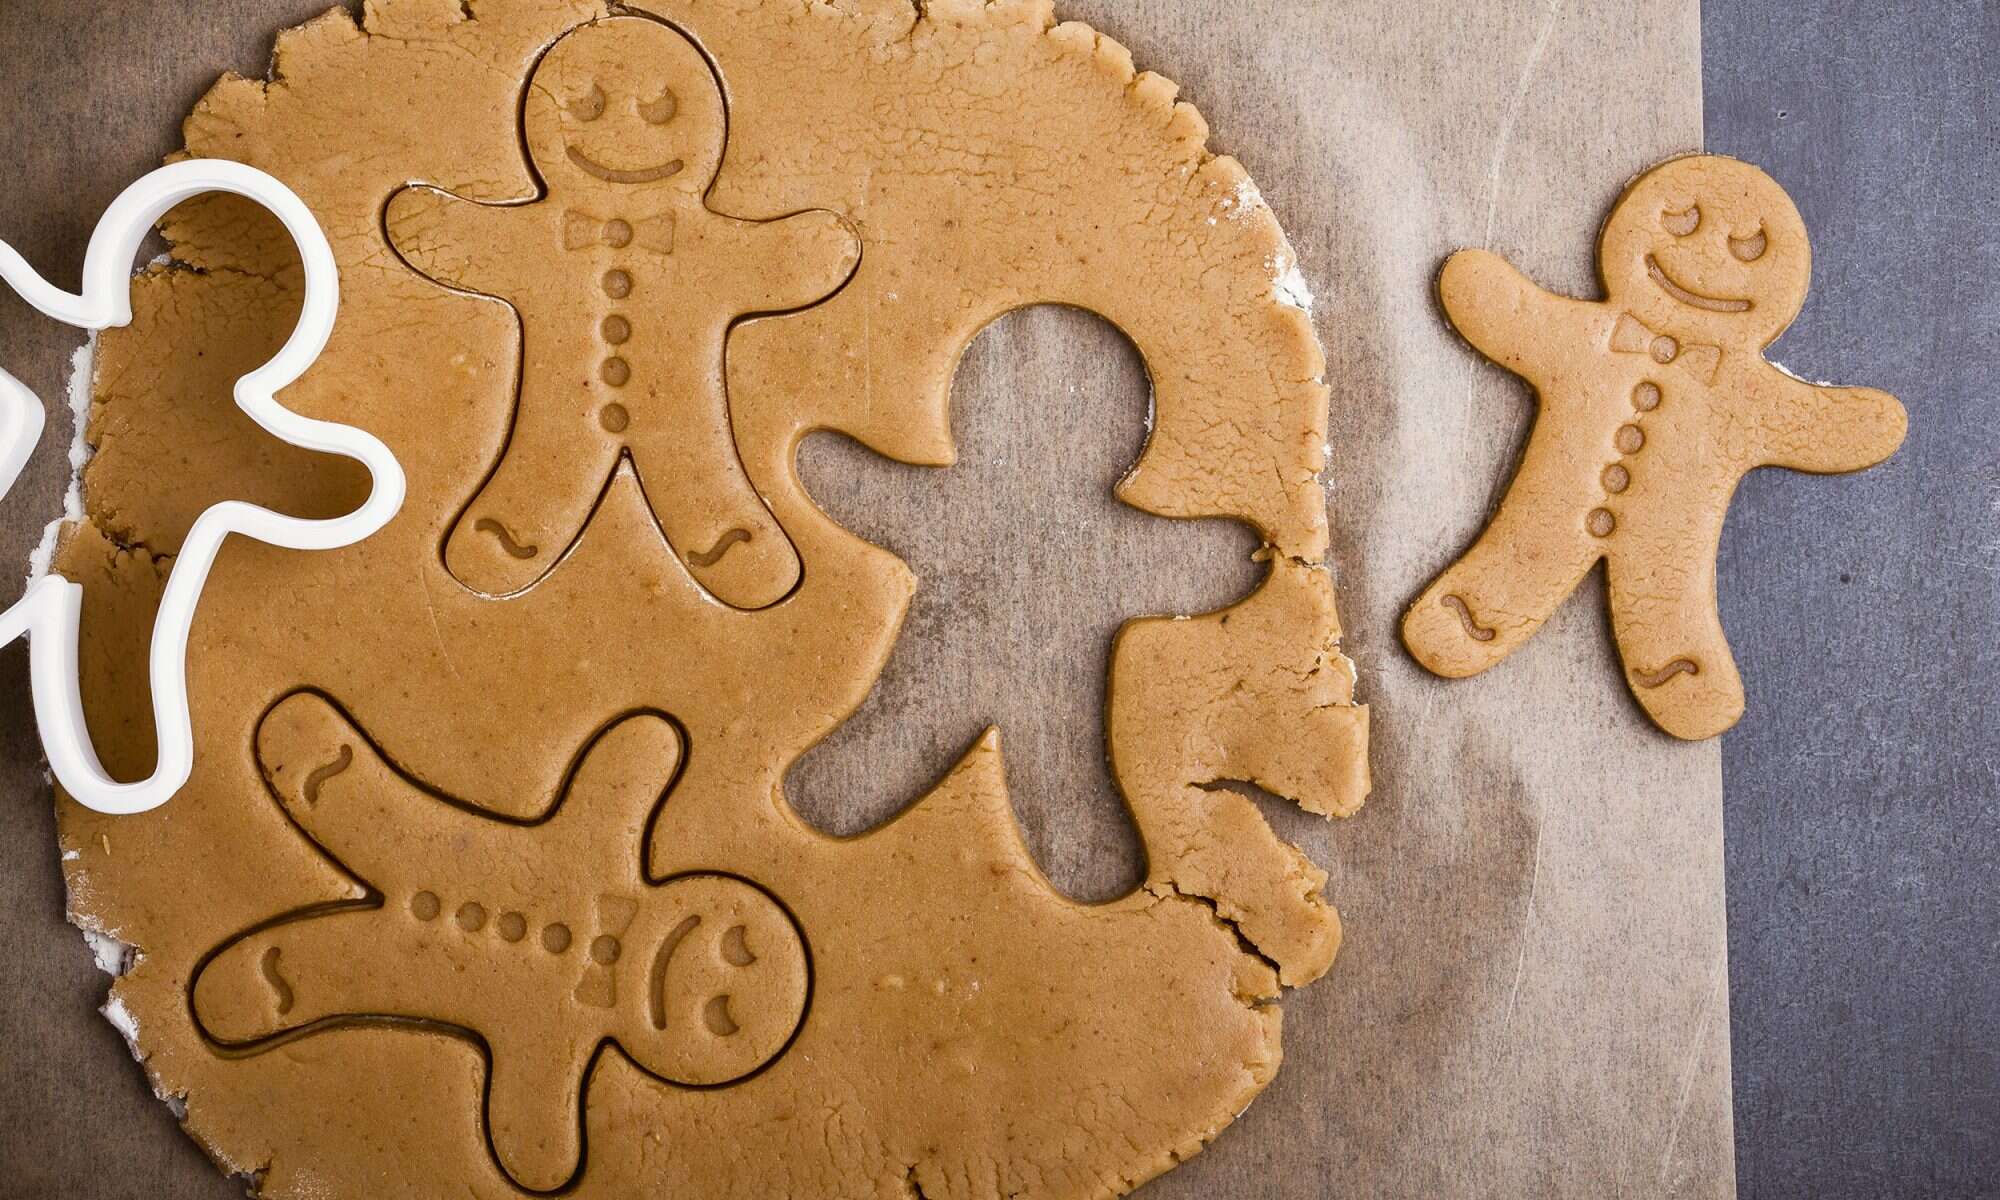 gingerbread man original story grimm